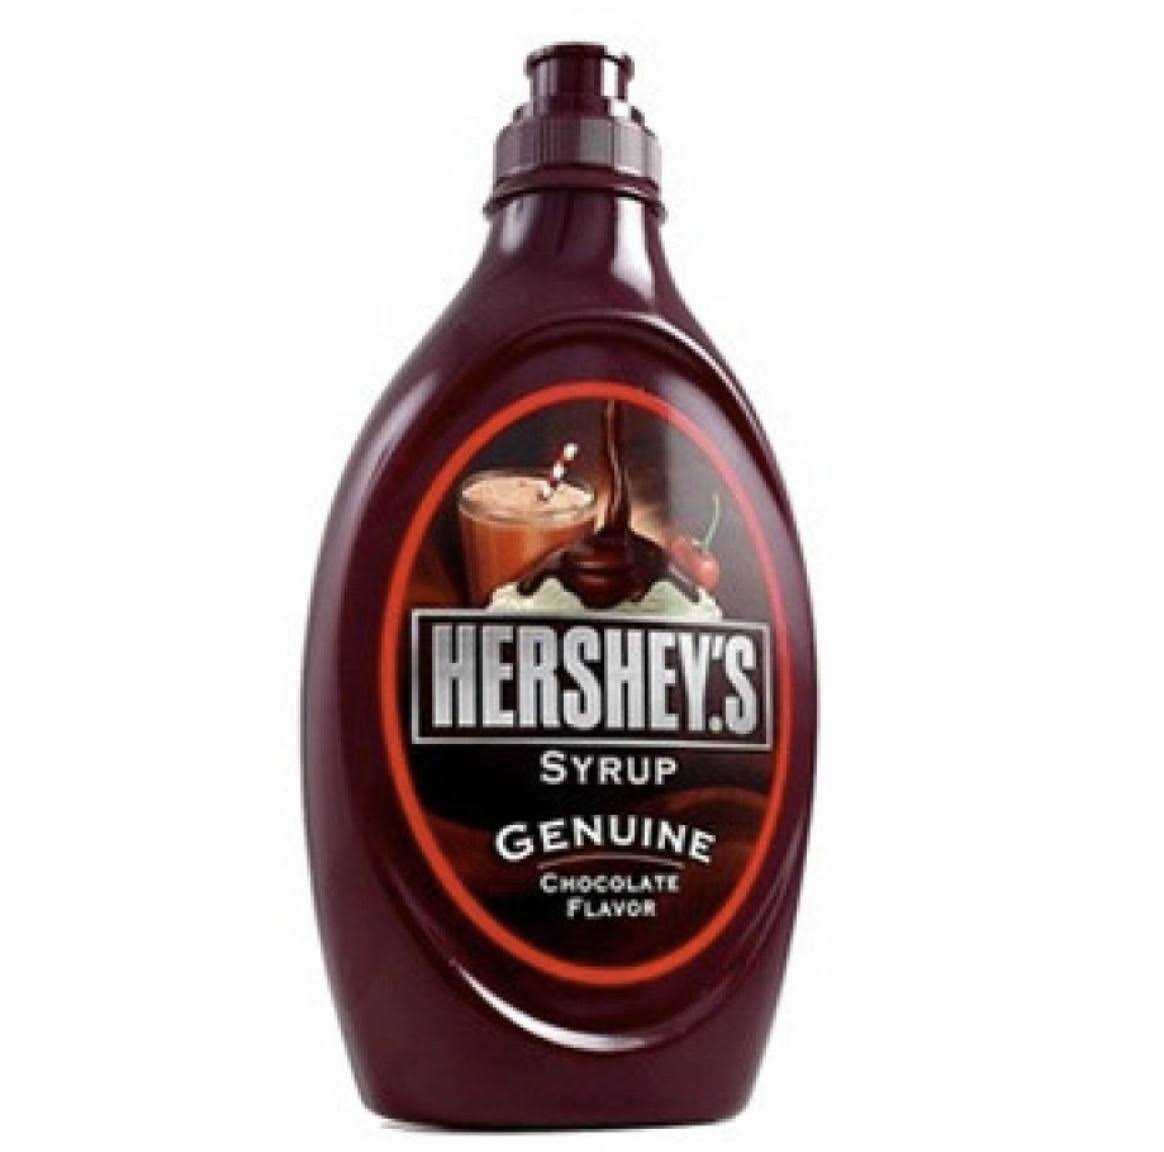 Hersheys Genuine Chocolate Flavor Syrup - 24oz